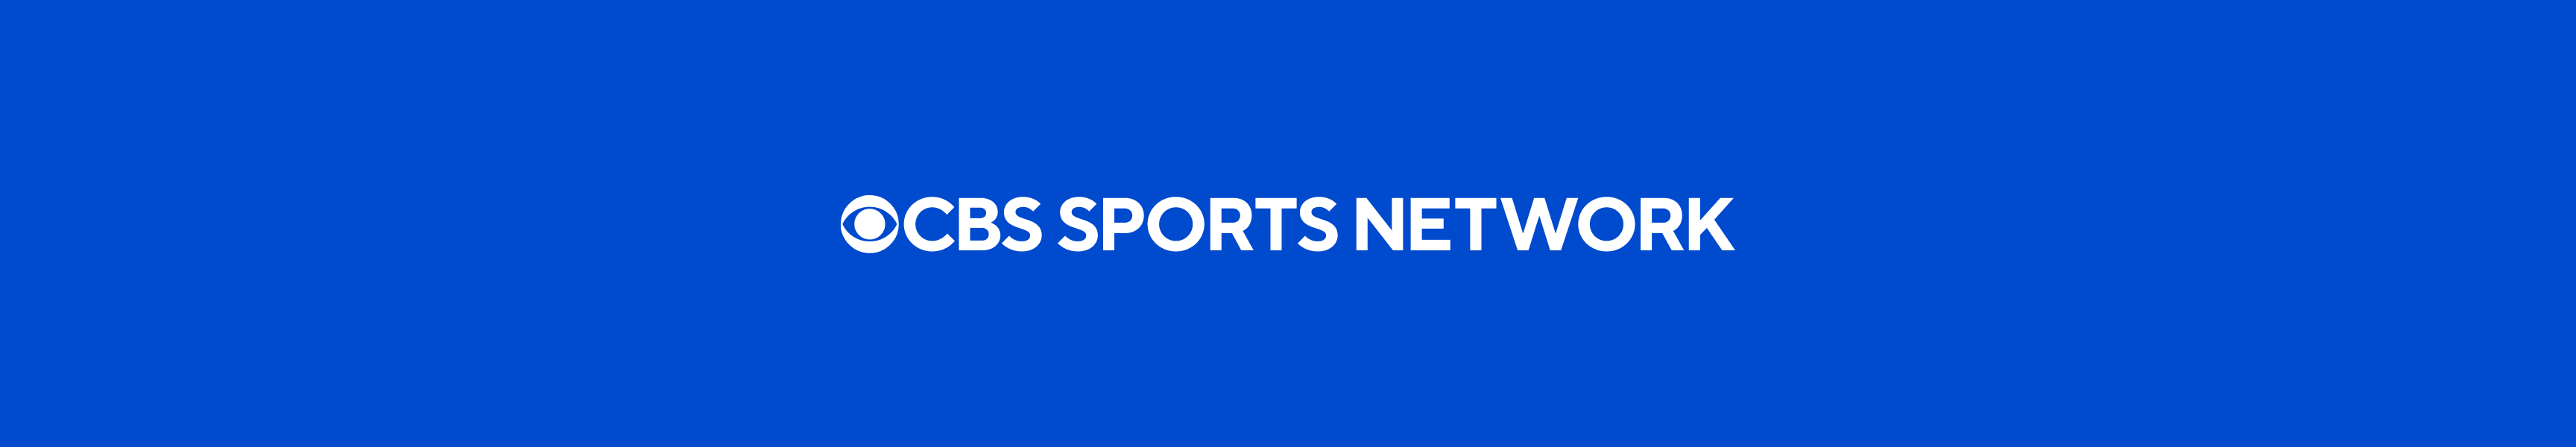 Network Sports CBS